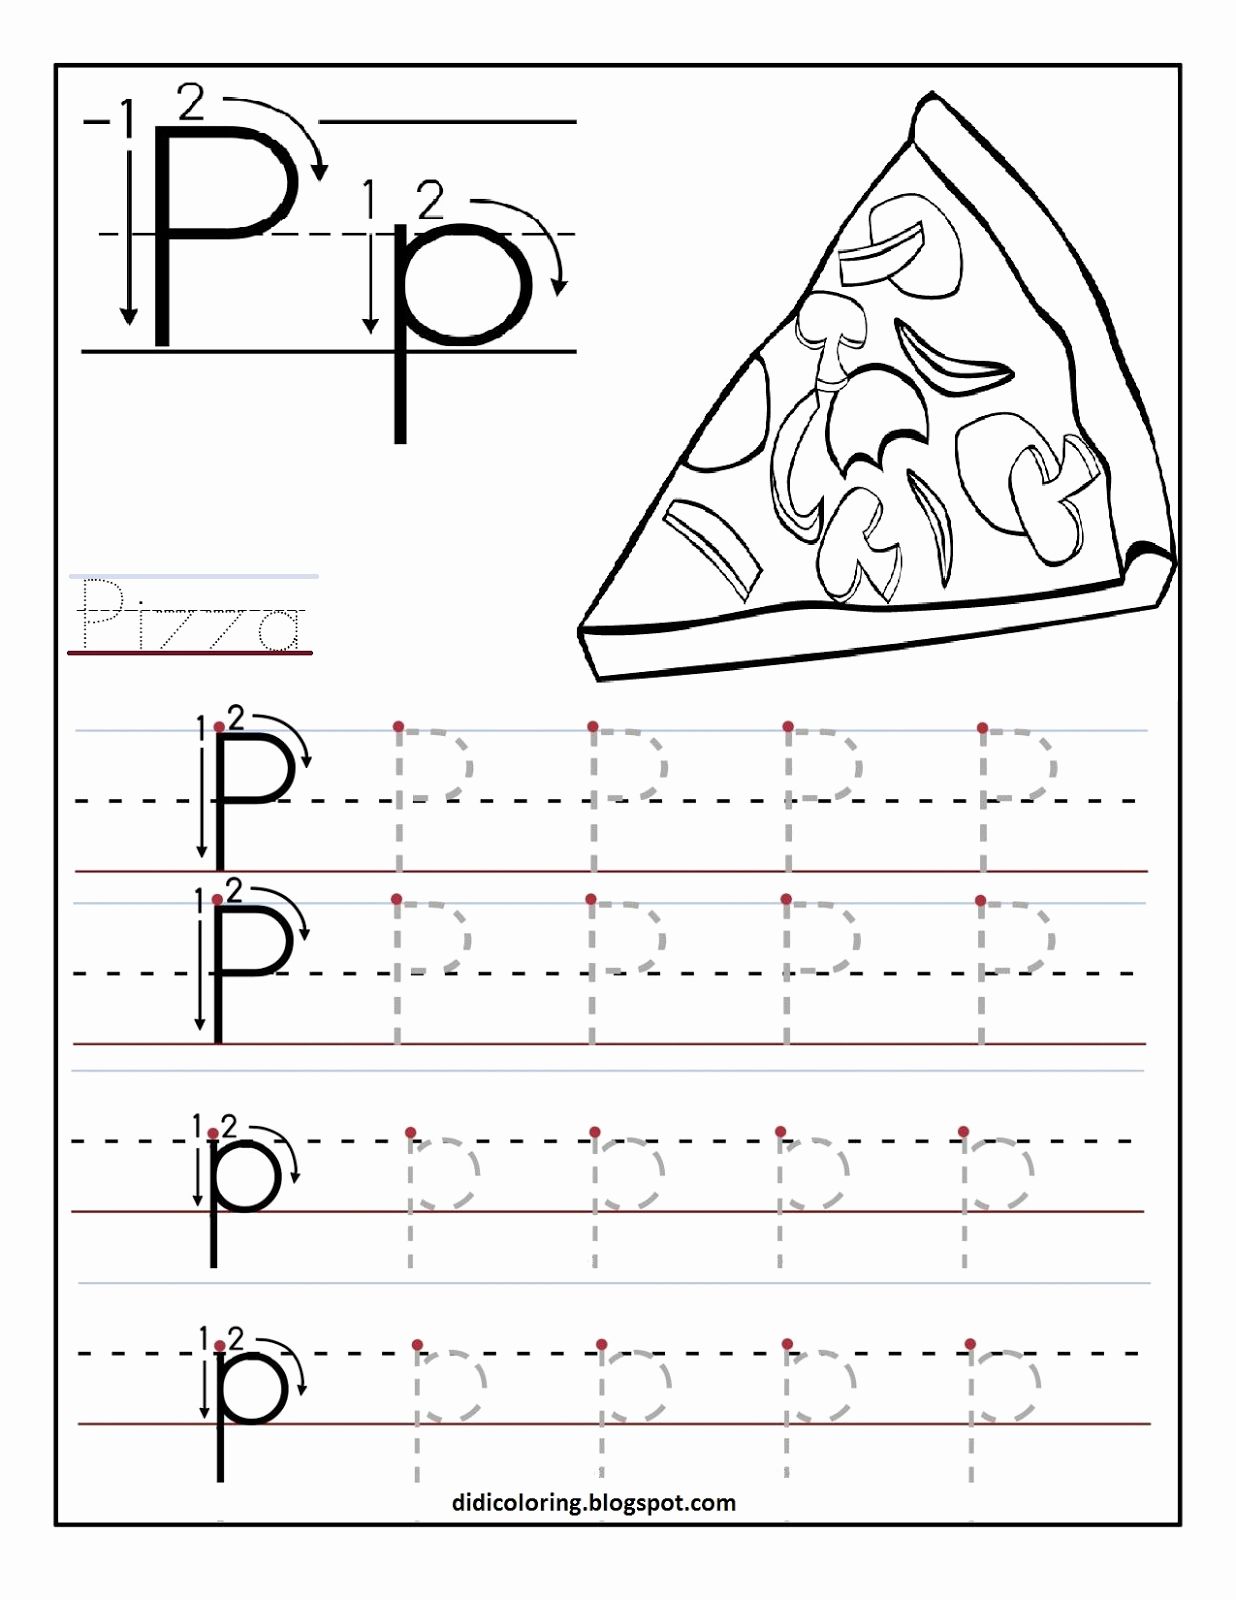 Free Printable Letter P Worksheets Luxury Free Printable Worksheet Letter P for Your Child to Learn